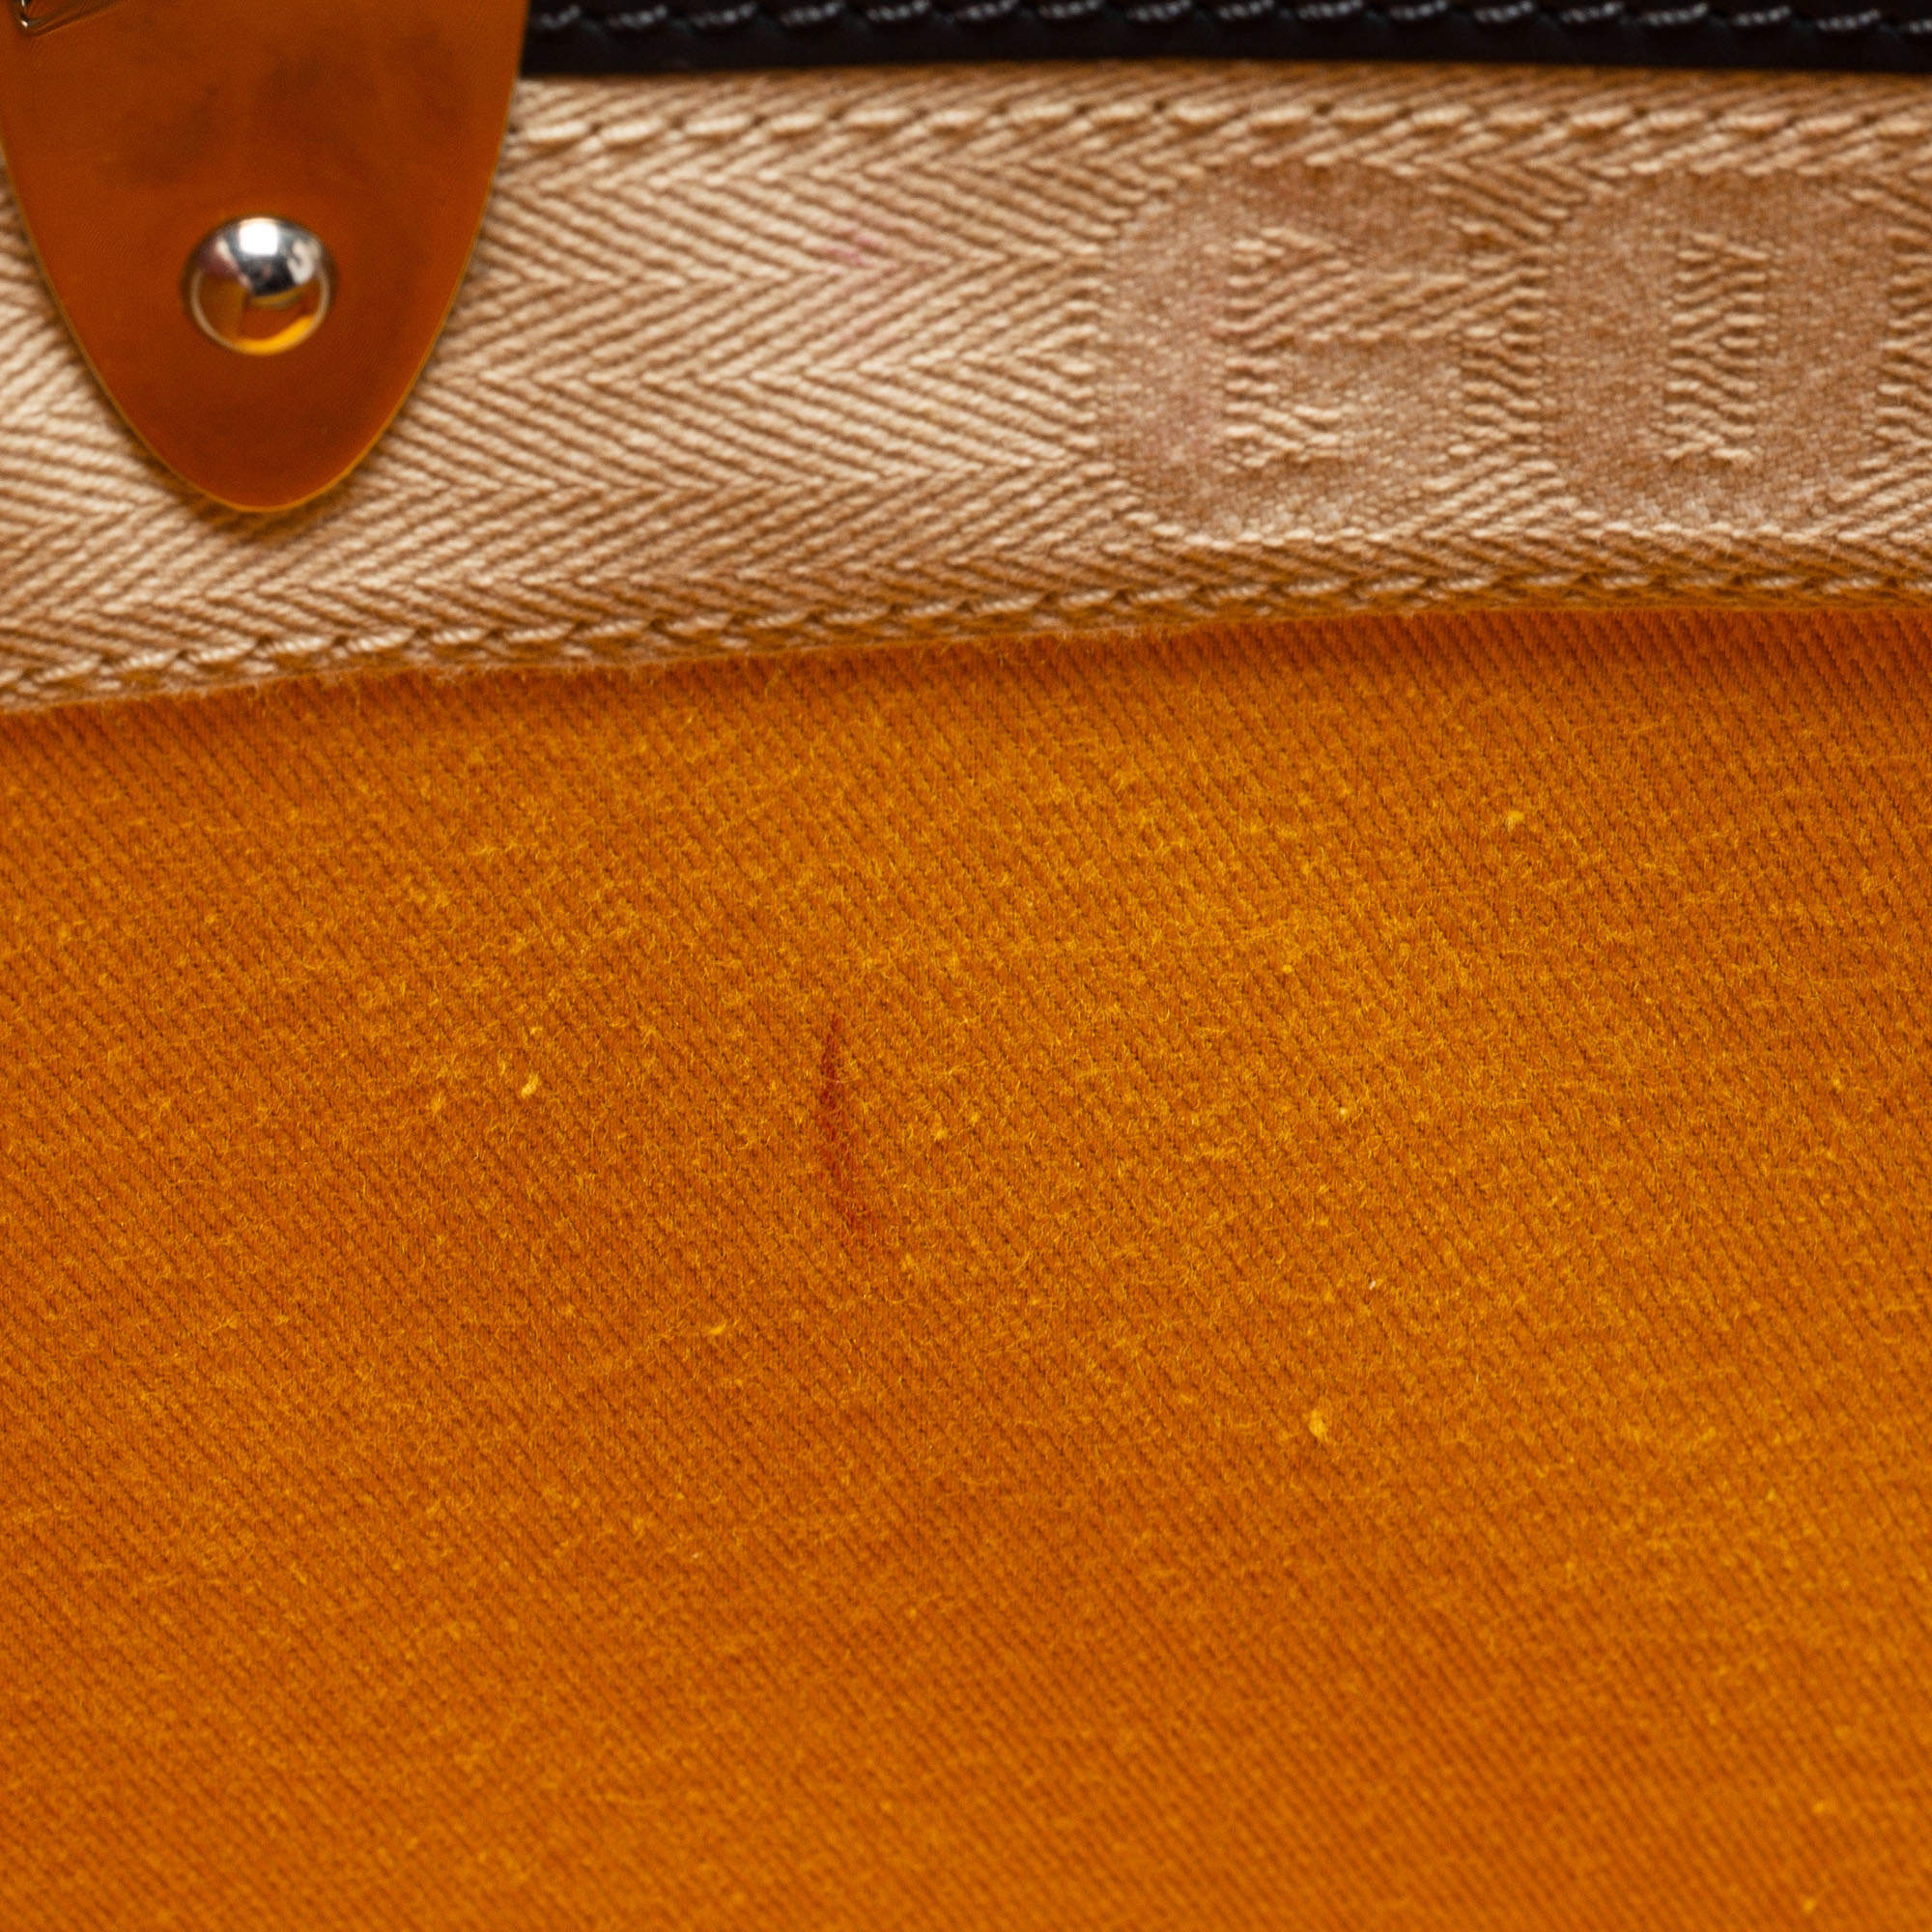 GoyardOfficial on X: Style and History intertwined: introducing the Vendôme  bag in Mini and PM(small) sizes #goyard #sogoyard #goyardvendomebagmini  #goyardvendomebagpm #newbagbygoyard #timelessstyle #timelesselegance   / X